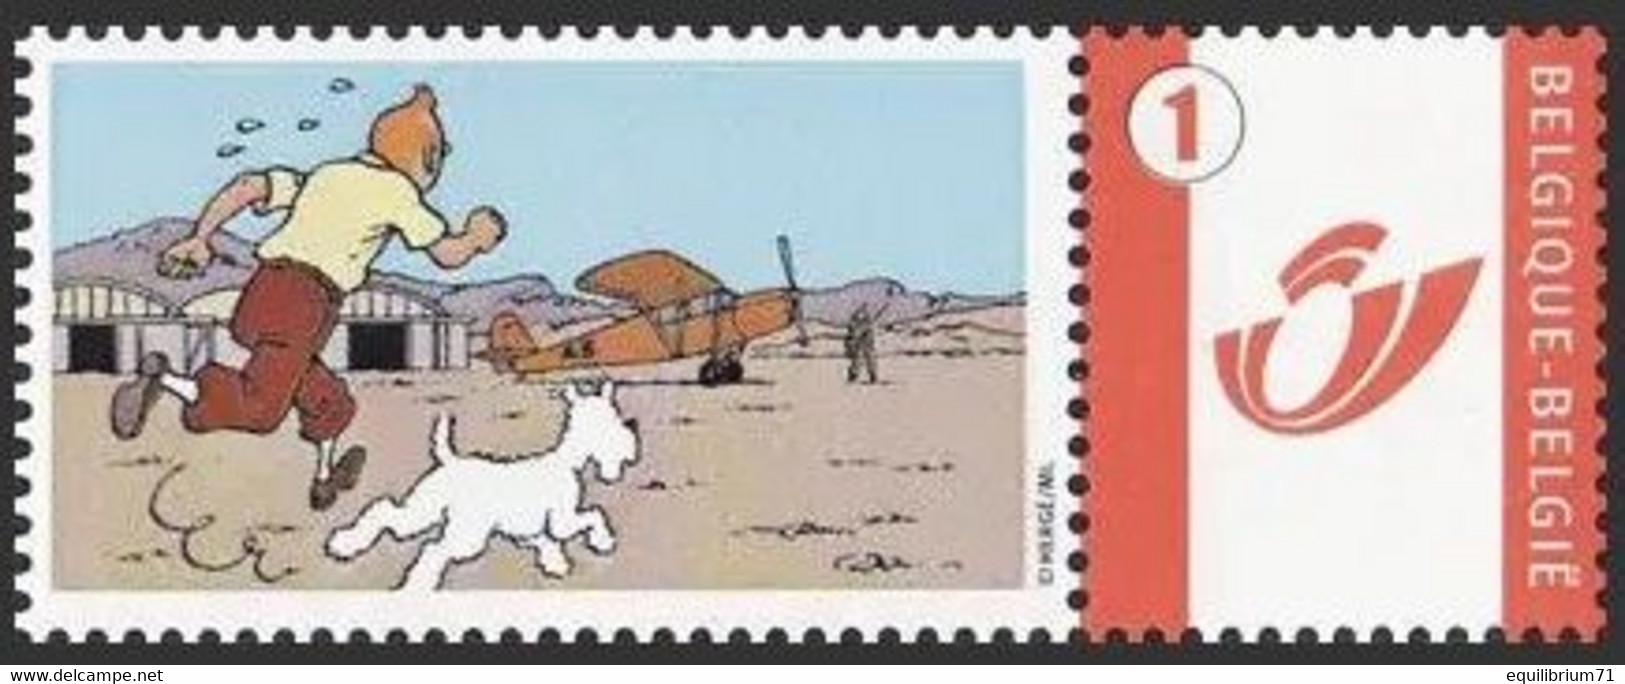 DUOSTAMP/MYSTAMP**  Tintin, Avion/Kuifje, Vliegtuig/Tim, Flugzeug/Tintin, Airplane - (Hergé) - Sous Blister/Verpakt - Philabédés